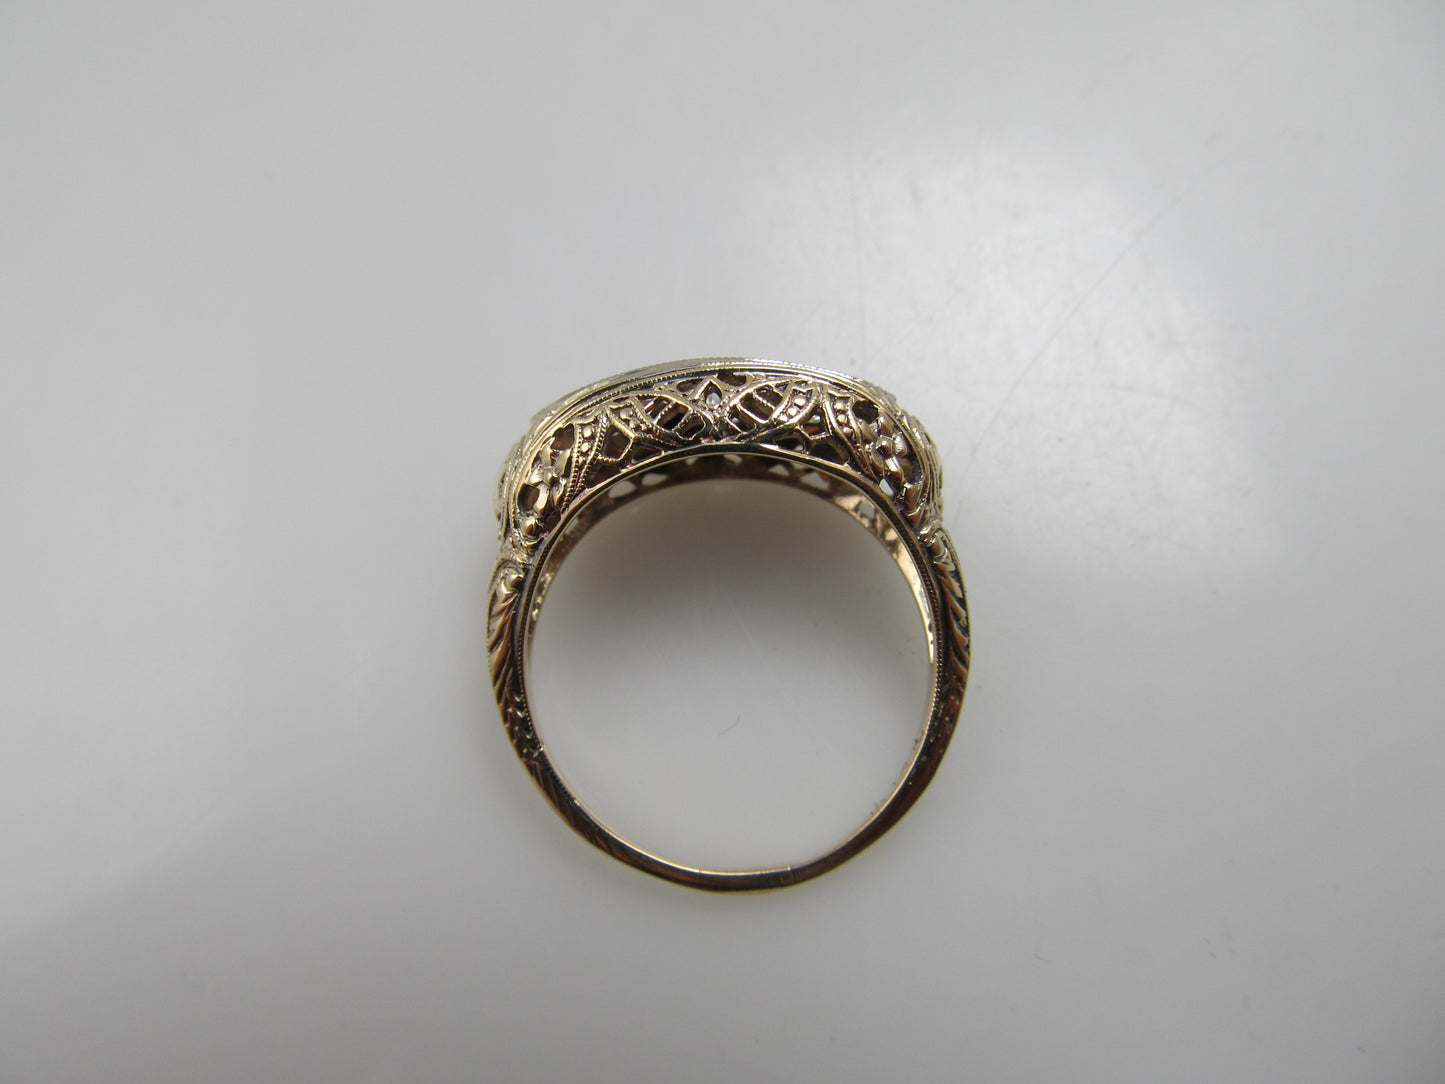 Vintage 14k yellow gold filigree 3 stone diamond ring, circa 1920